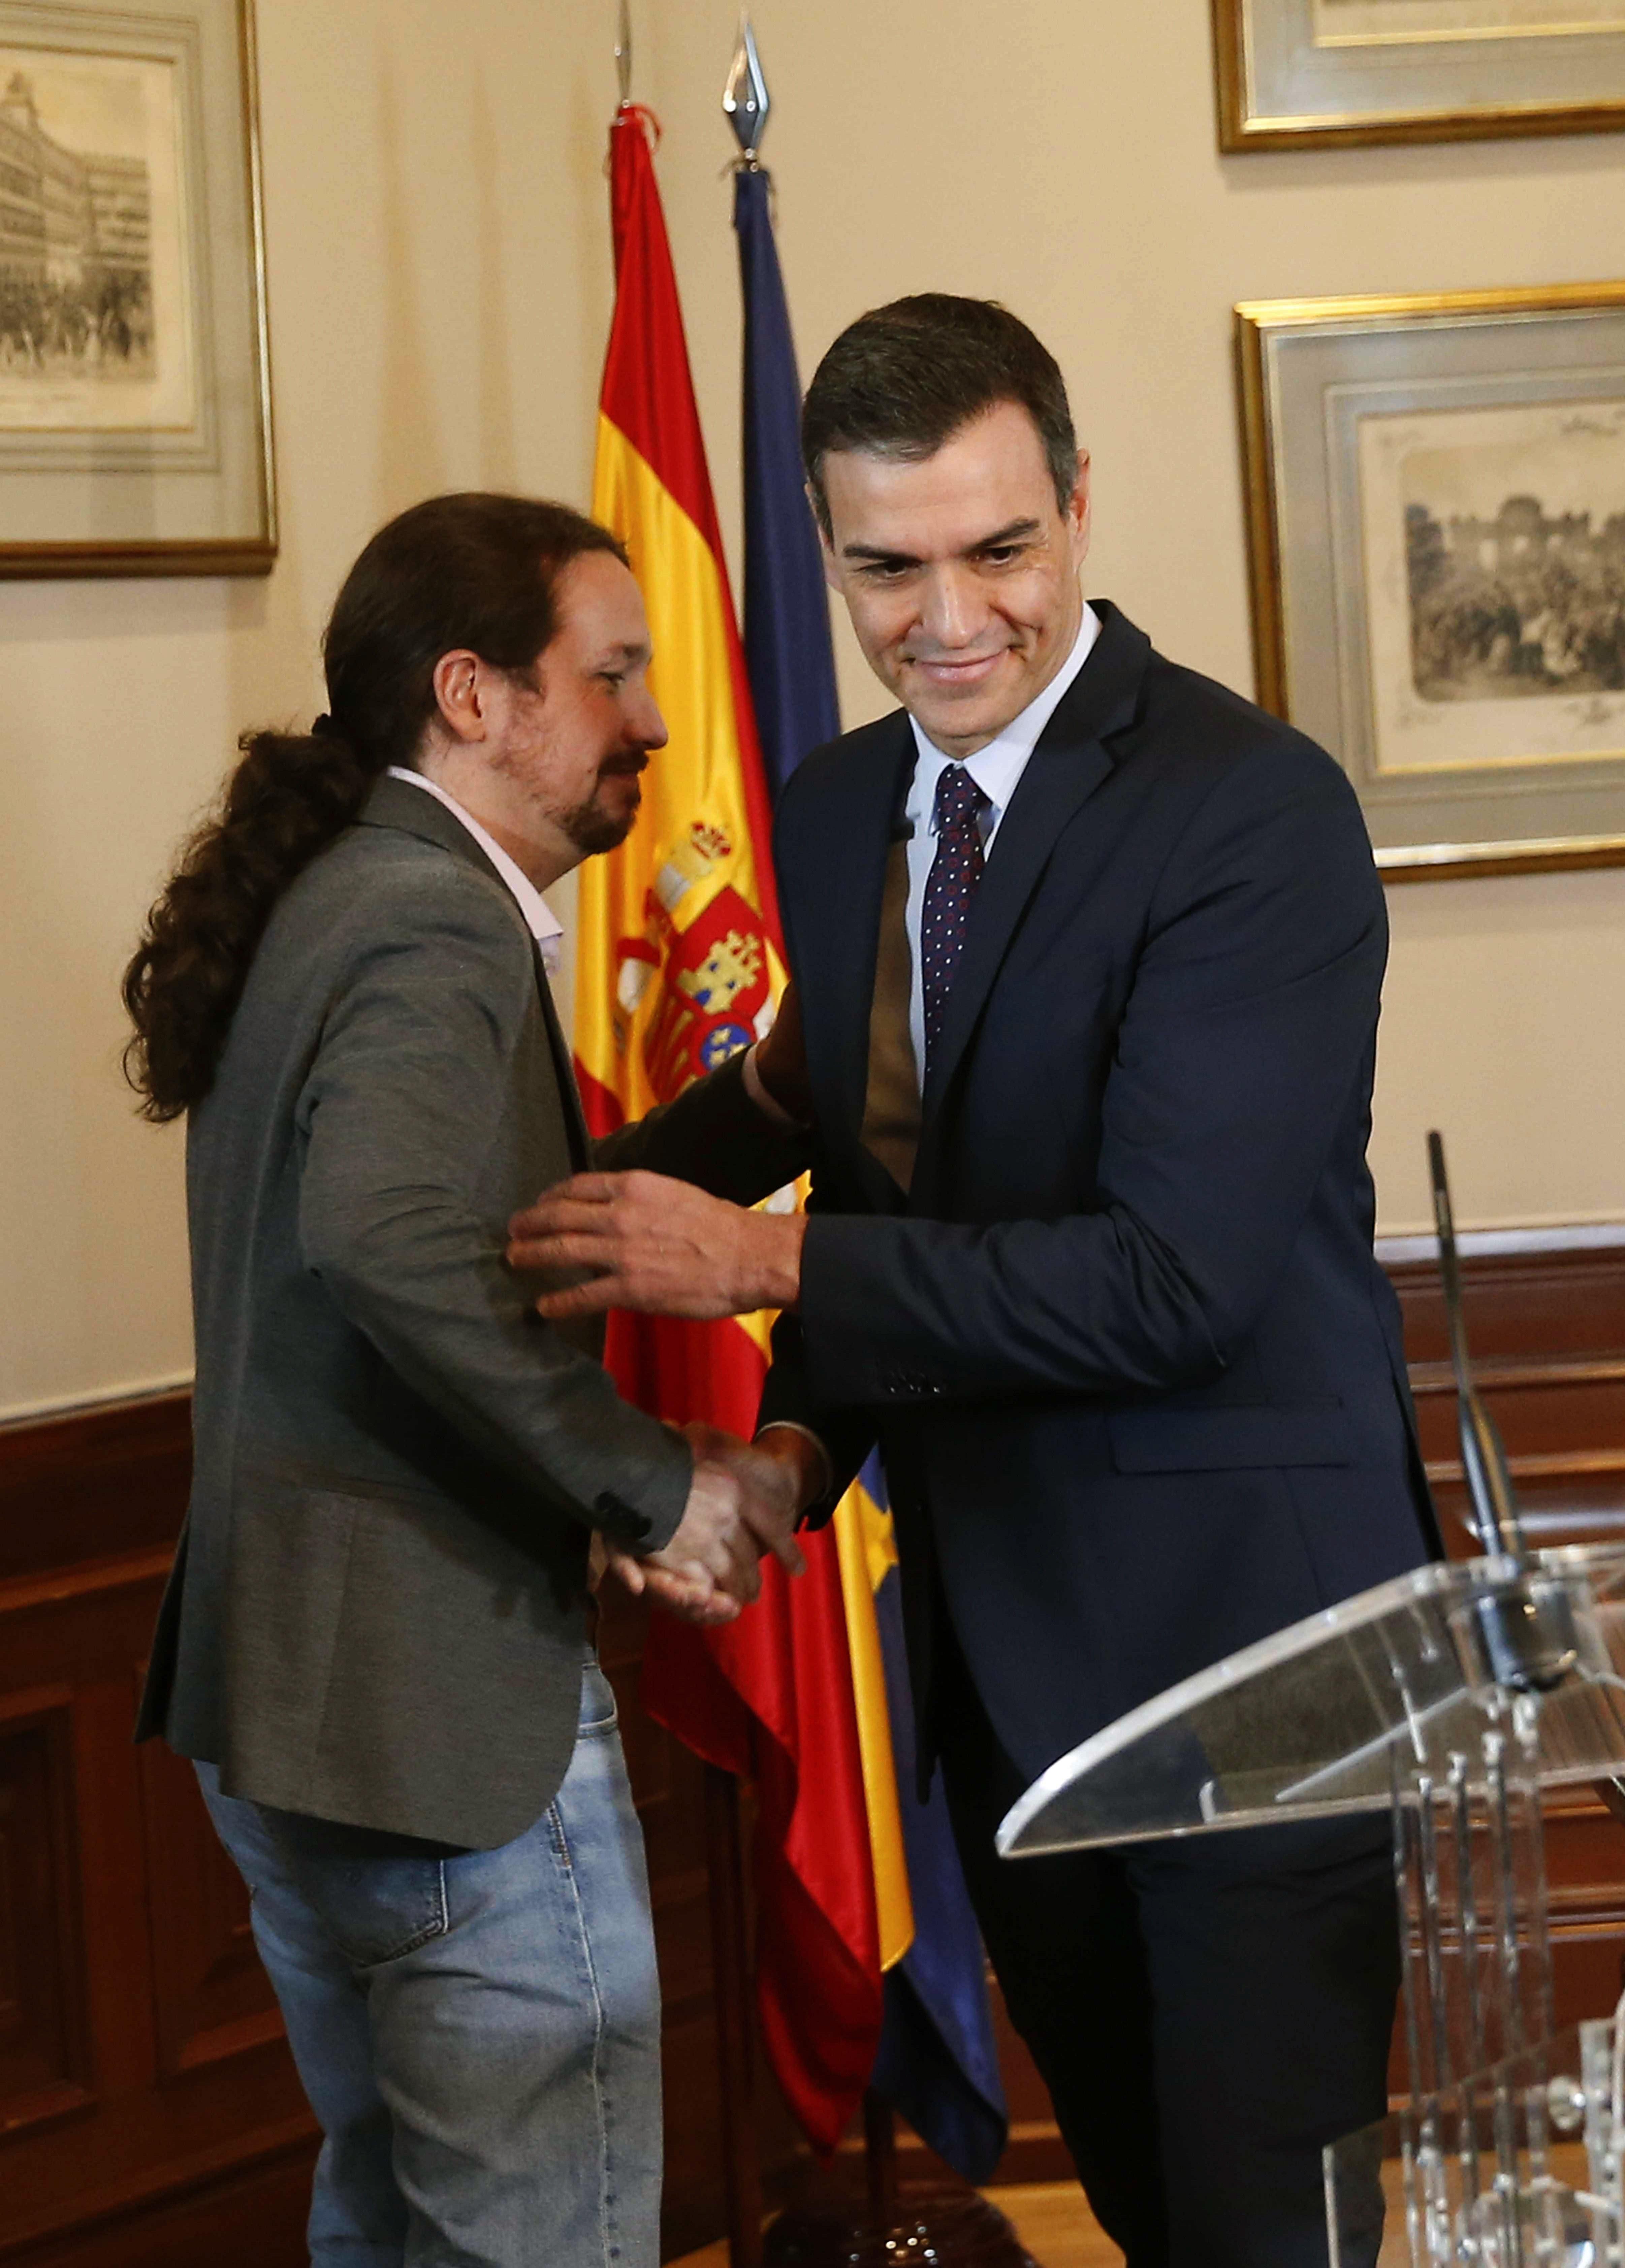 Sánchez instructs Iglesias to not visit Junqueras in prison